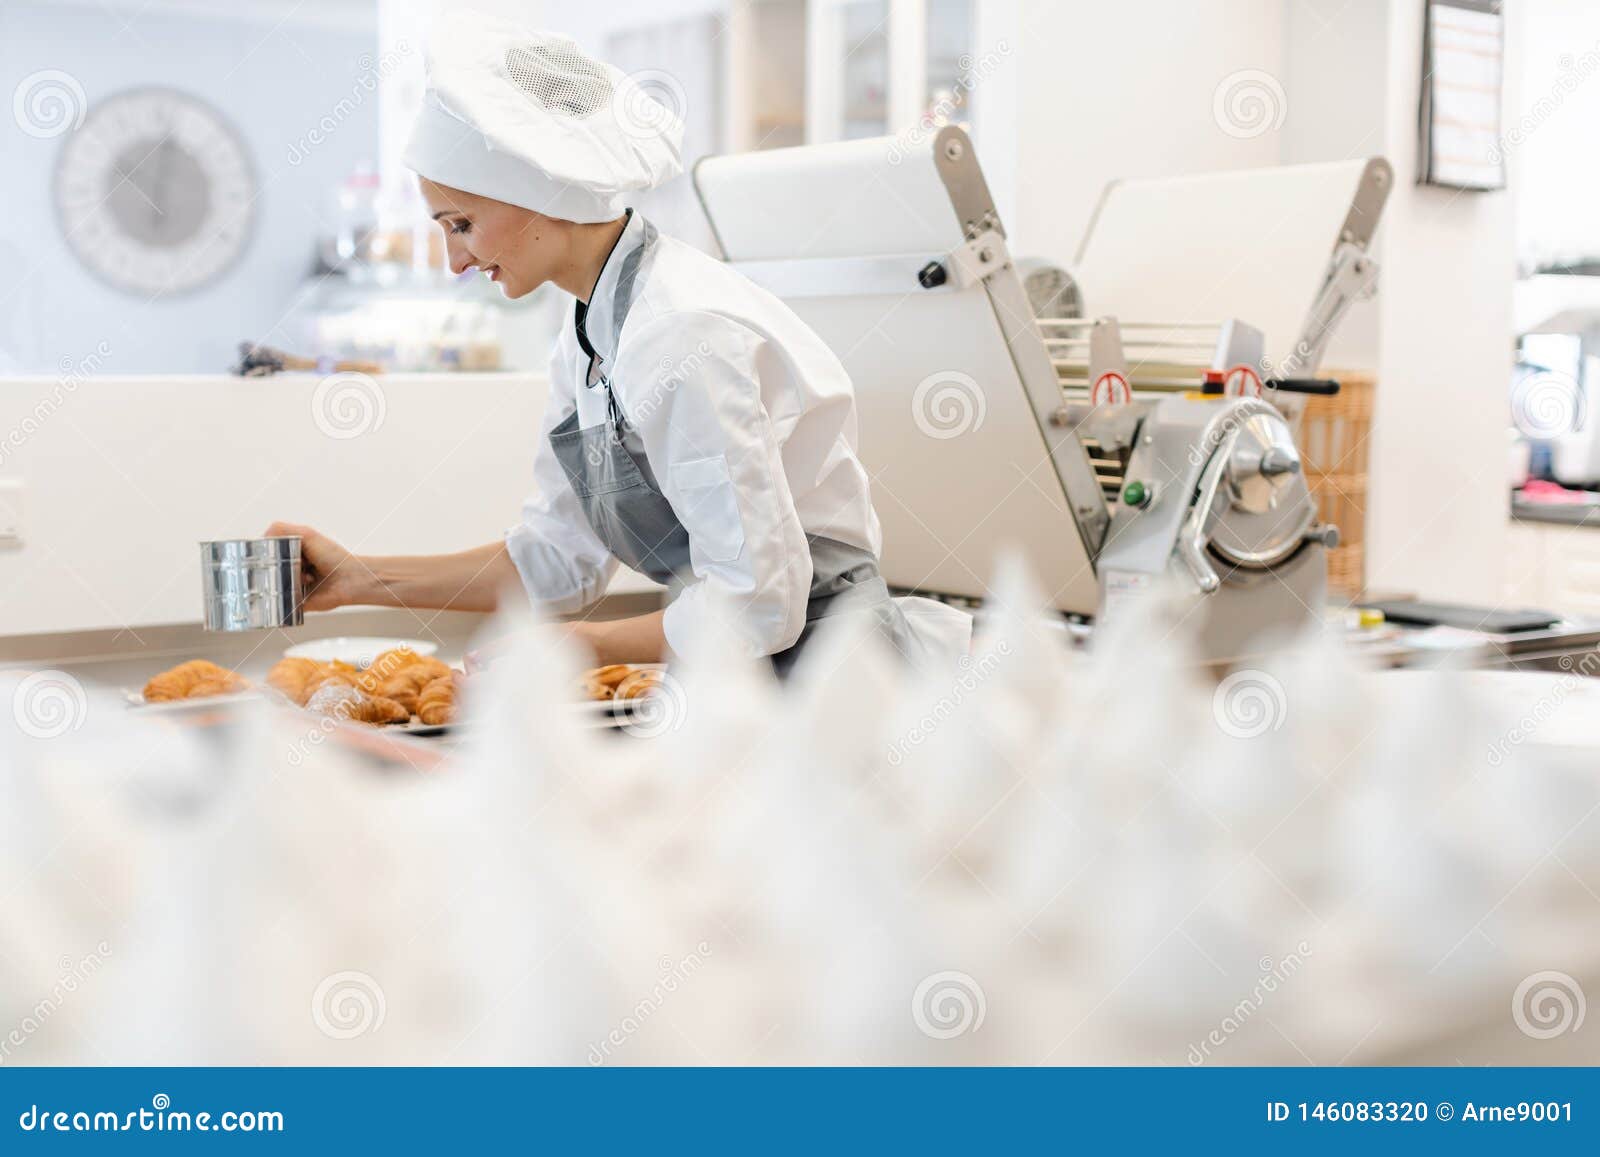 patissier in her bakery shop with lots of meringue